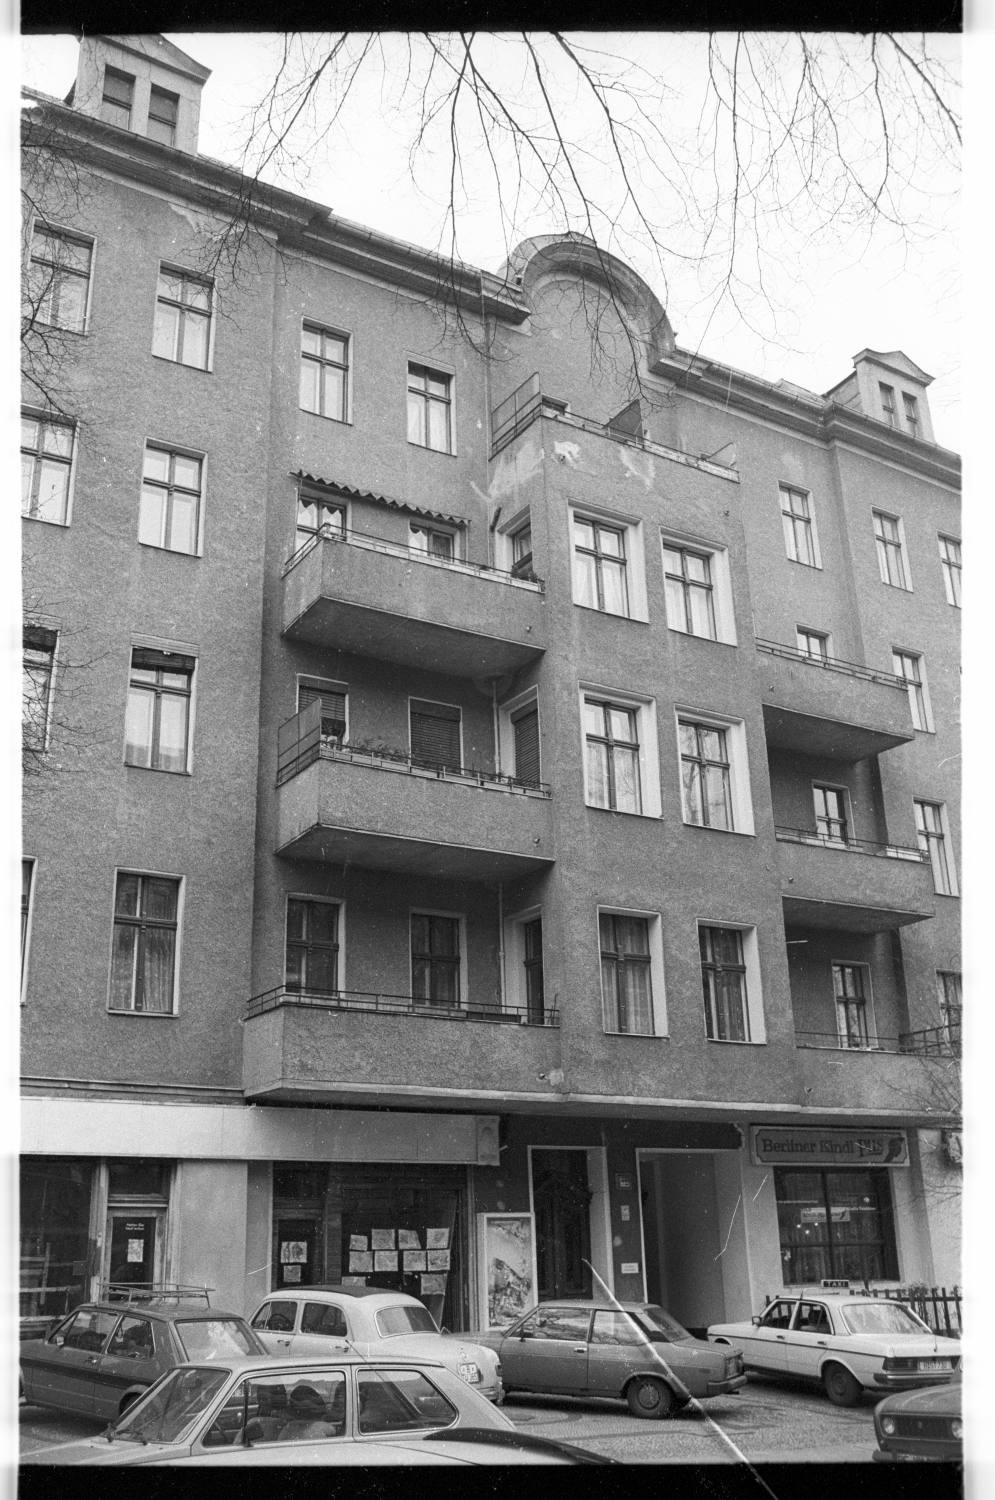 Kleinbildnegative: Mietshaus, Dickhardtstr. 11, 1982 (Museen Tempelhof-Schöneberg/Jürgen Henschel RR-F)